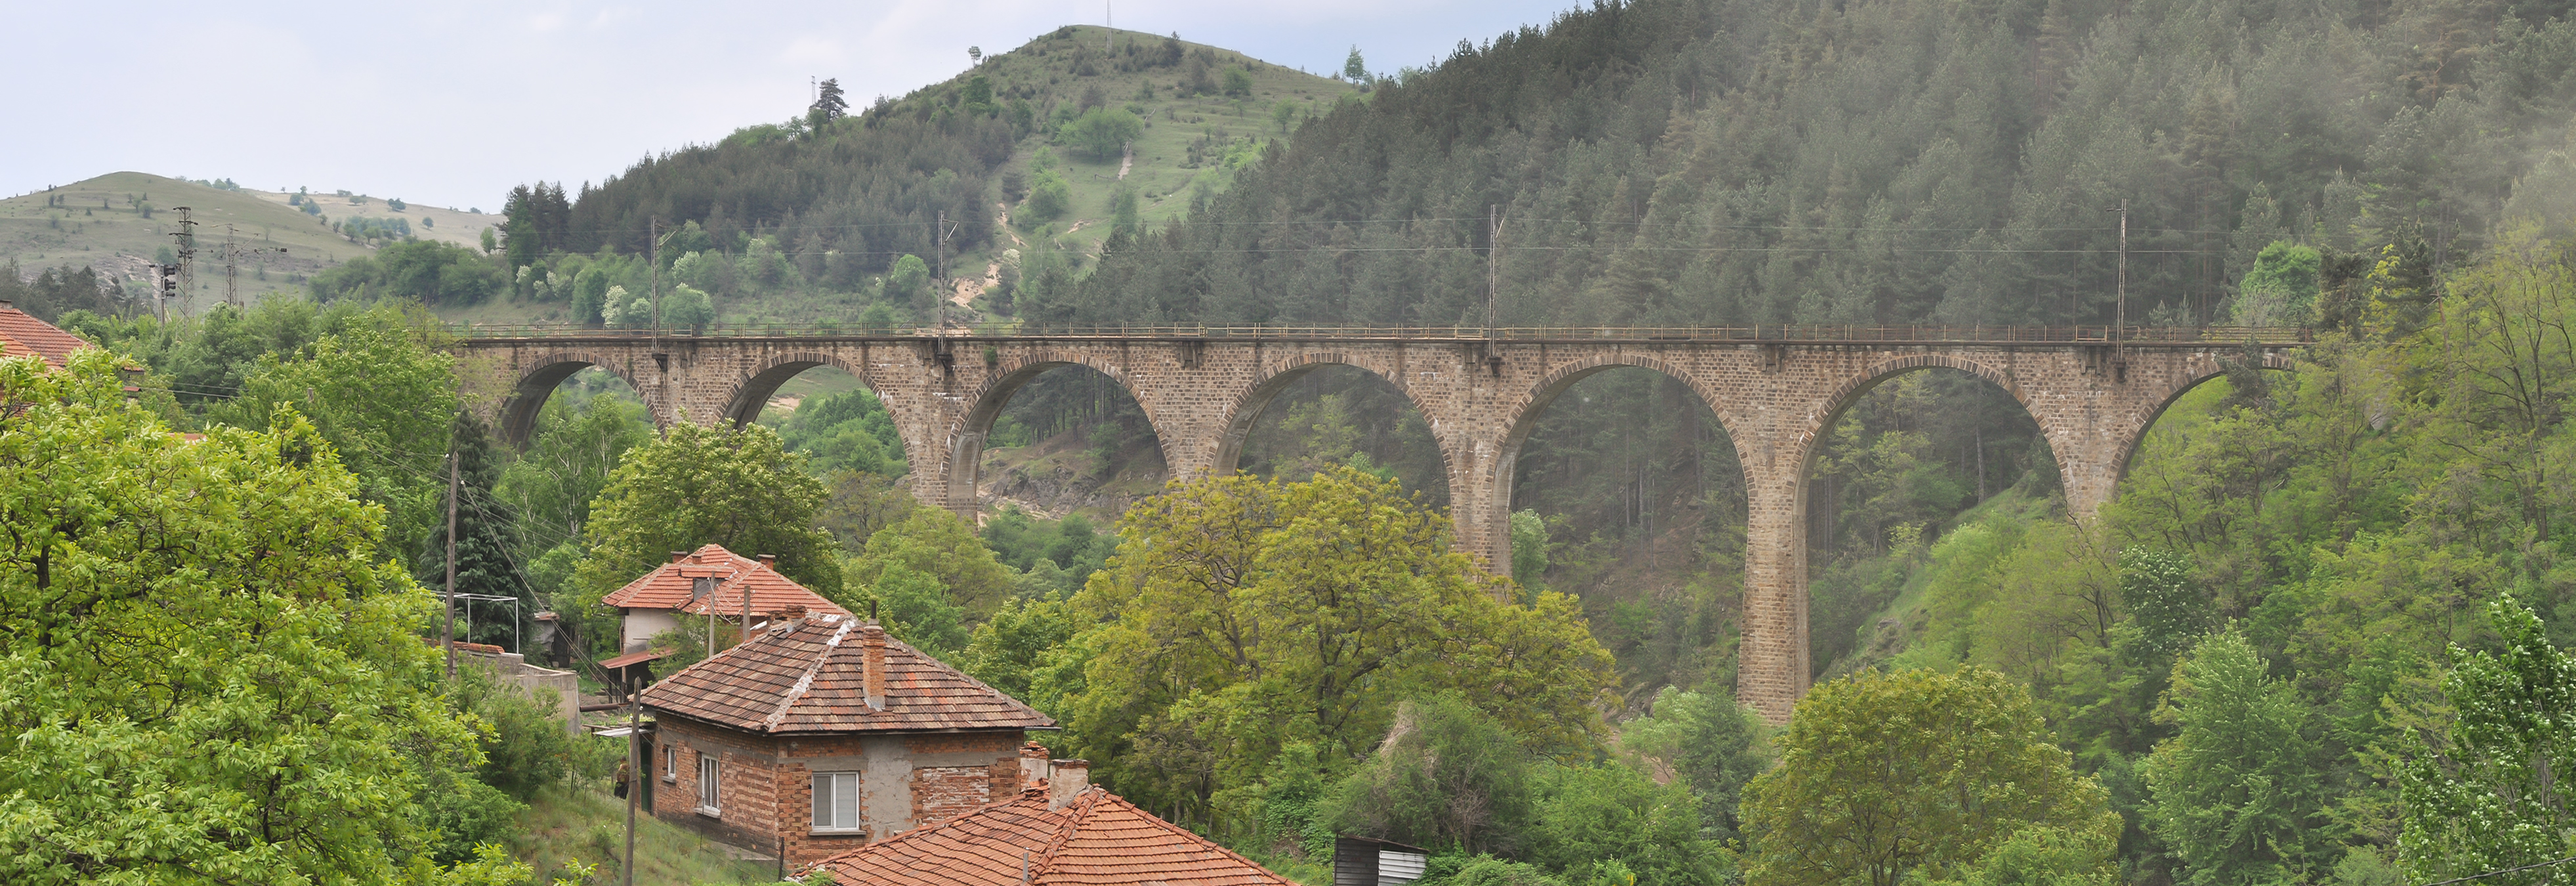 Klisura viaduct